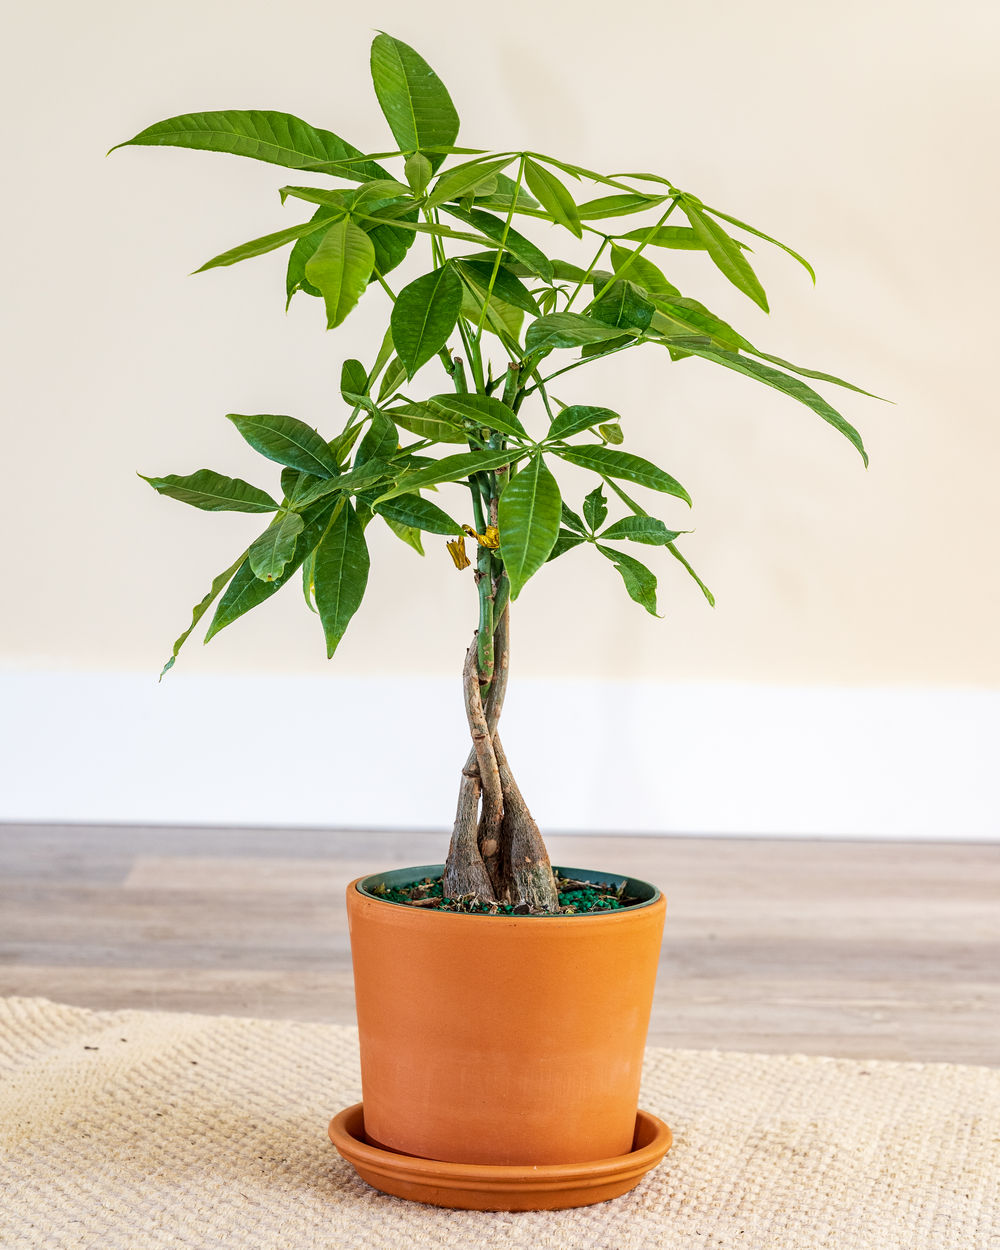 where can i buy a money tree plant